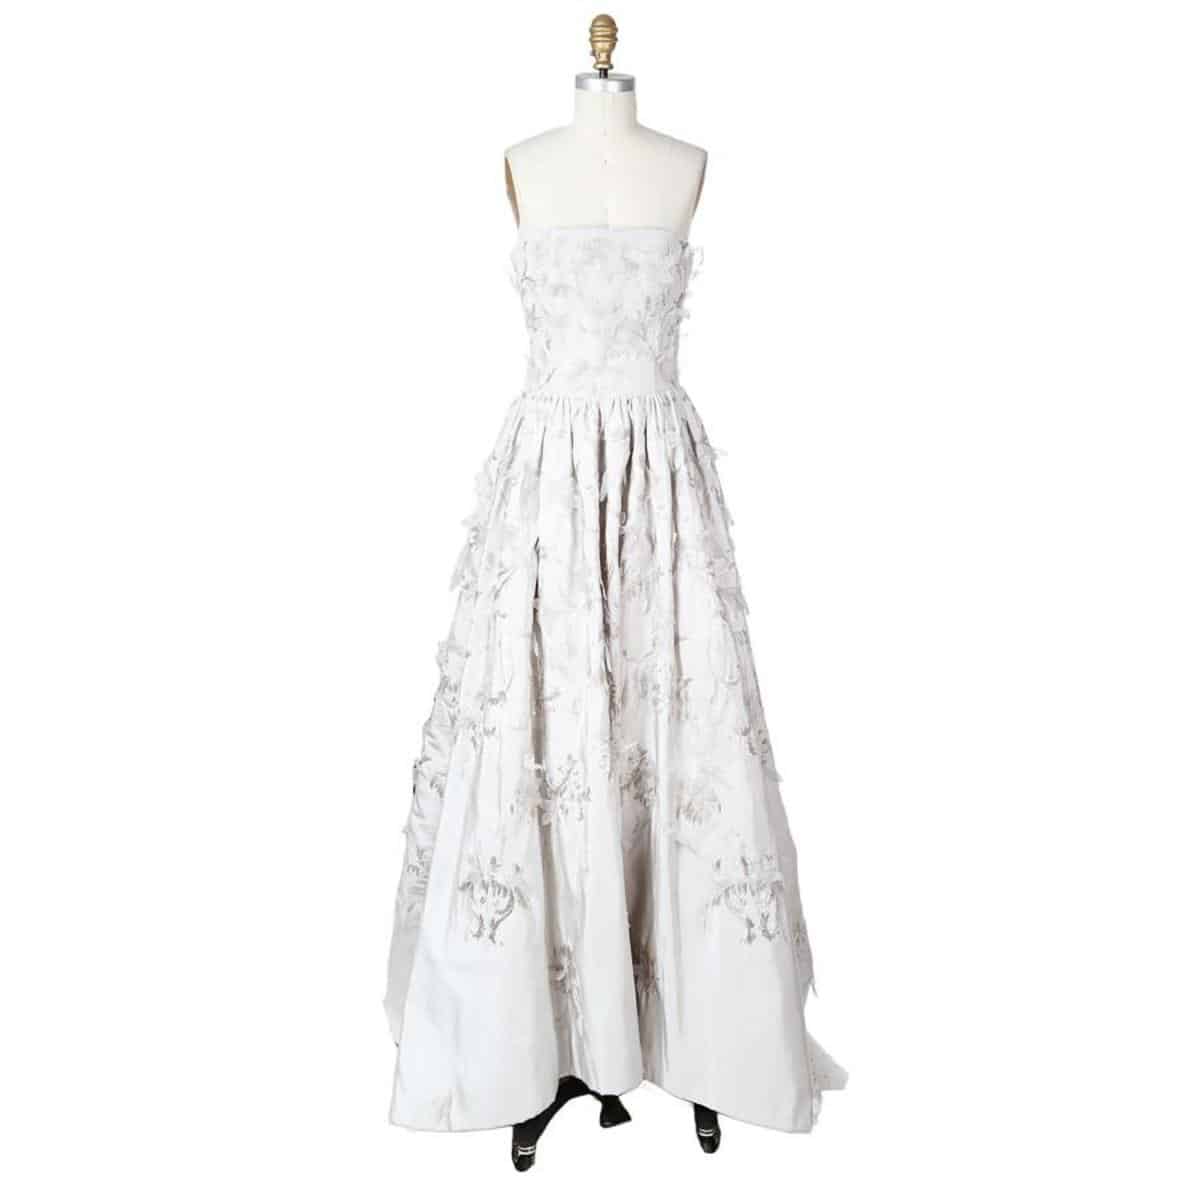 Vintage wedding gowns